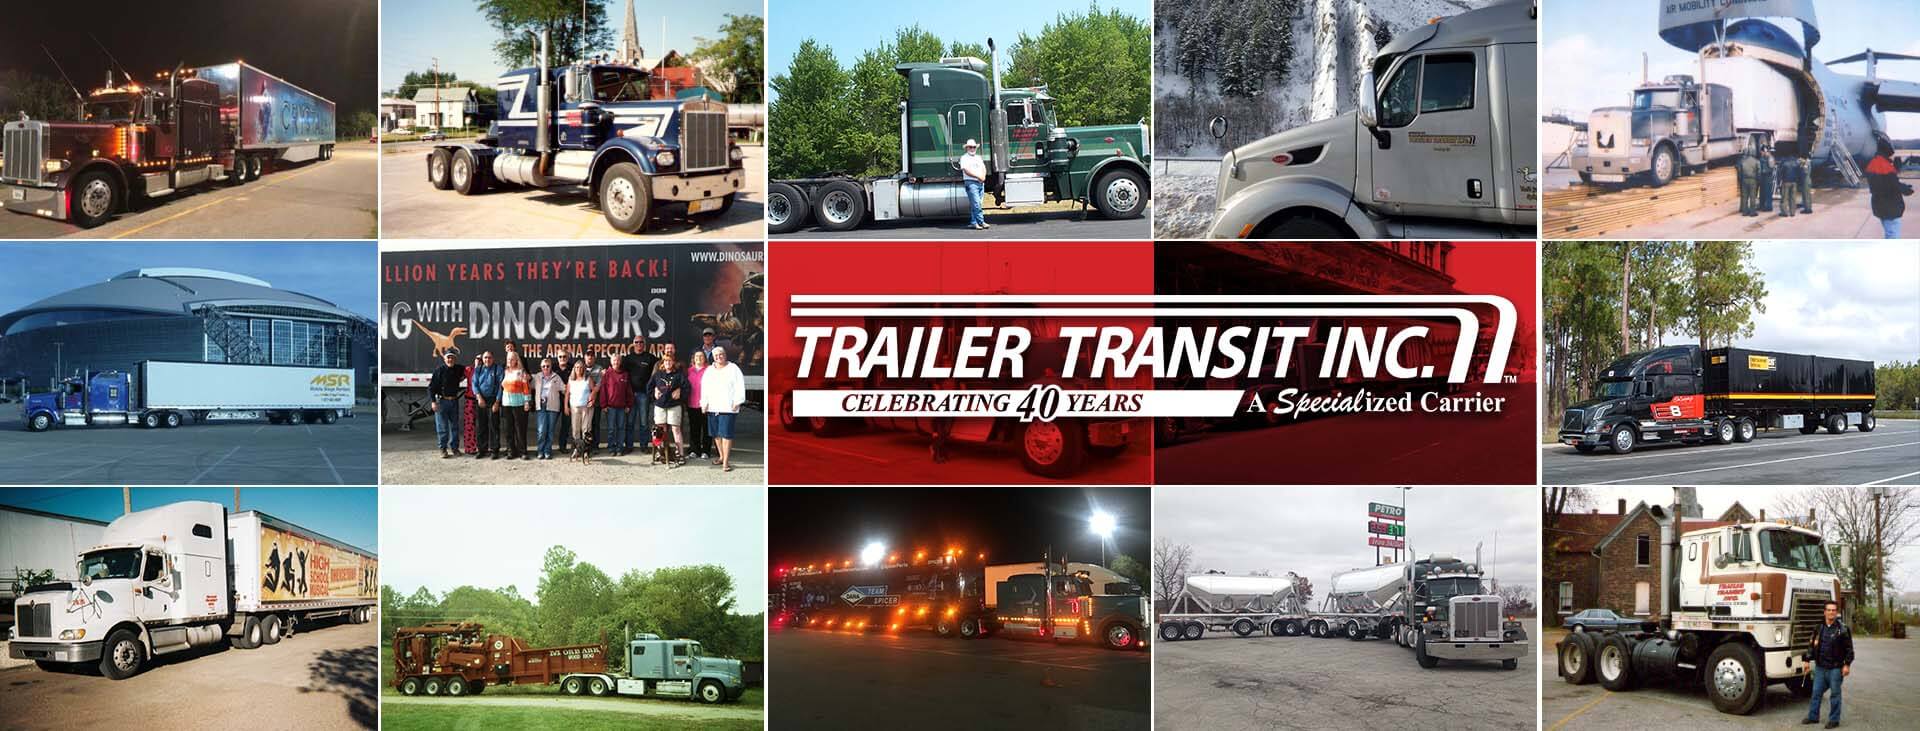 Trailer Transit Inc. 40 year anniversary image collage